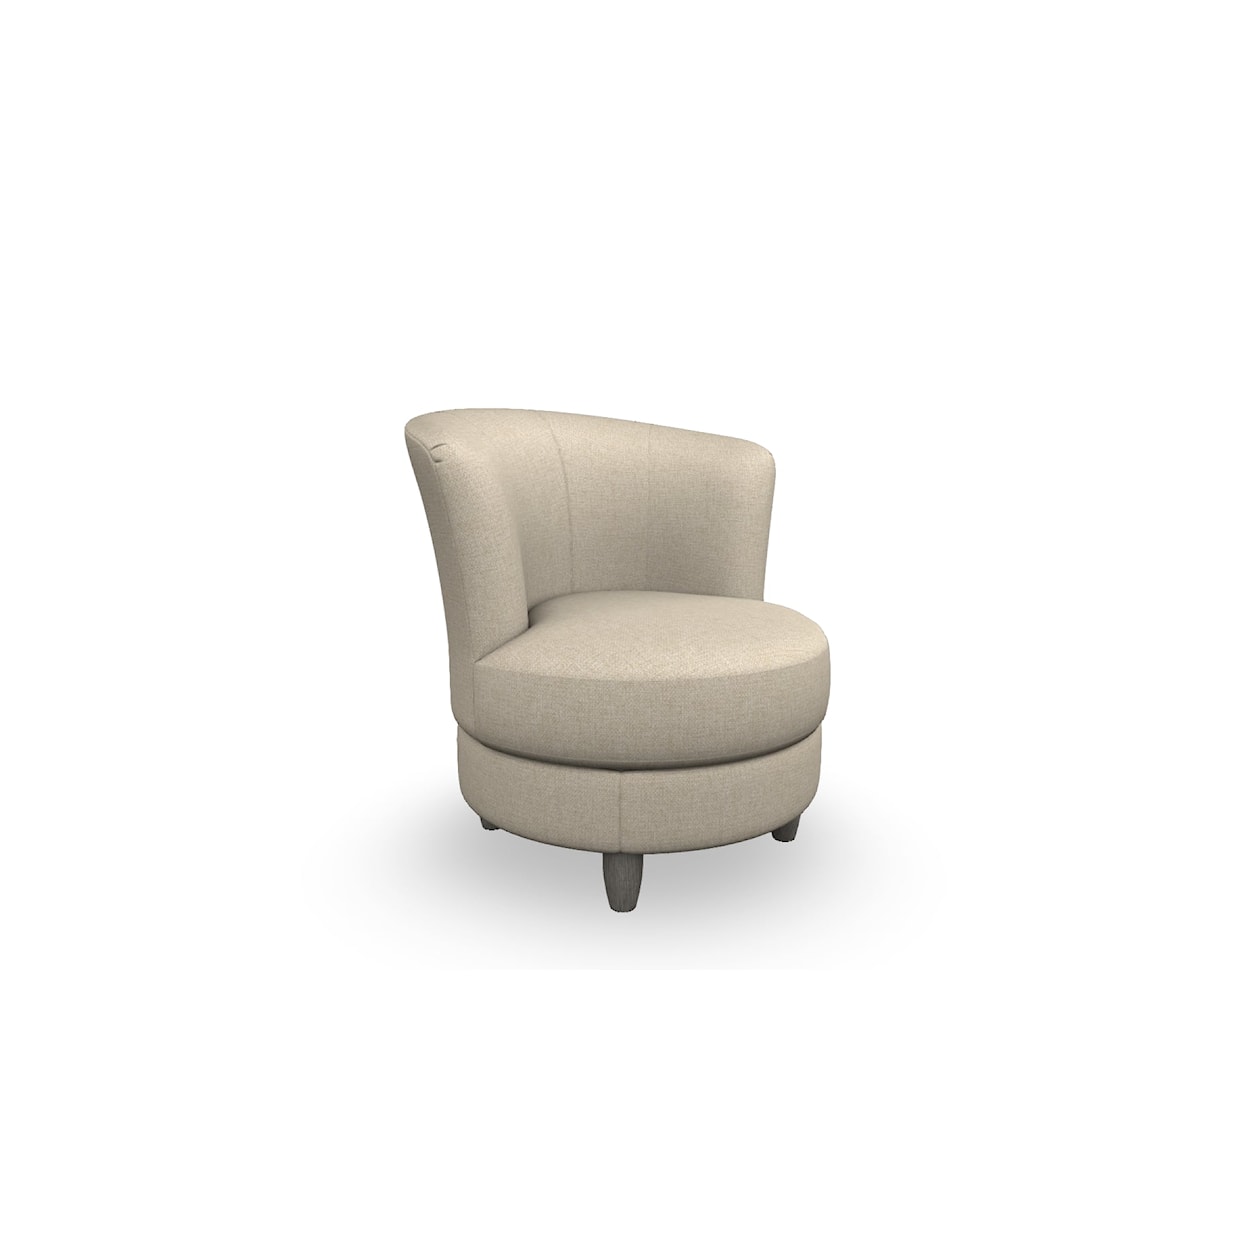 Best Home Furnishings PALMONA Swivel Chair